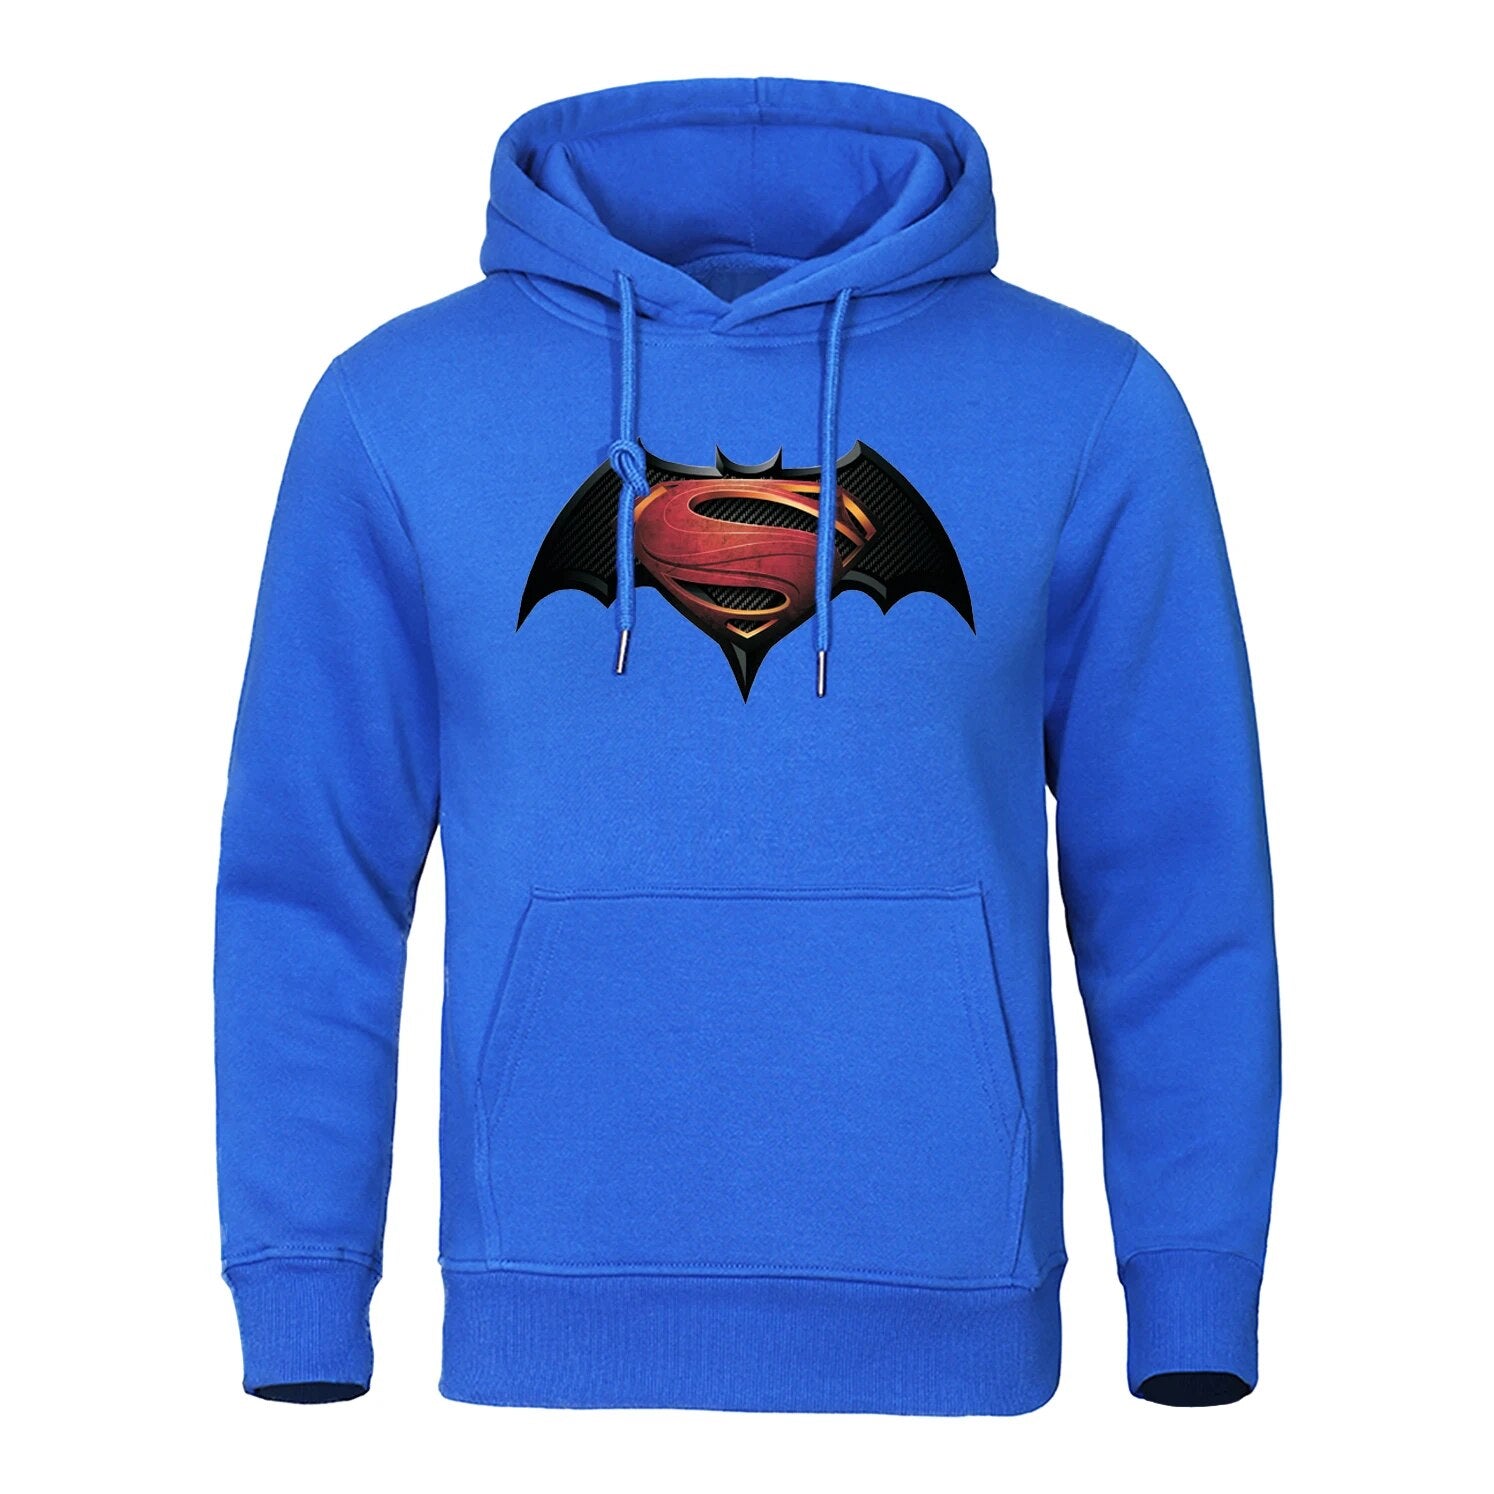 Superman / Batman - Super-Bat Hoodie - Men's Casual Streetwear-Blue1-S-